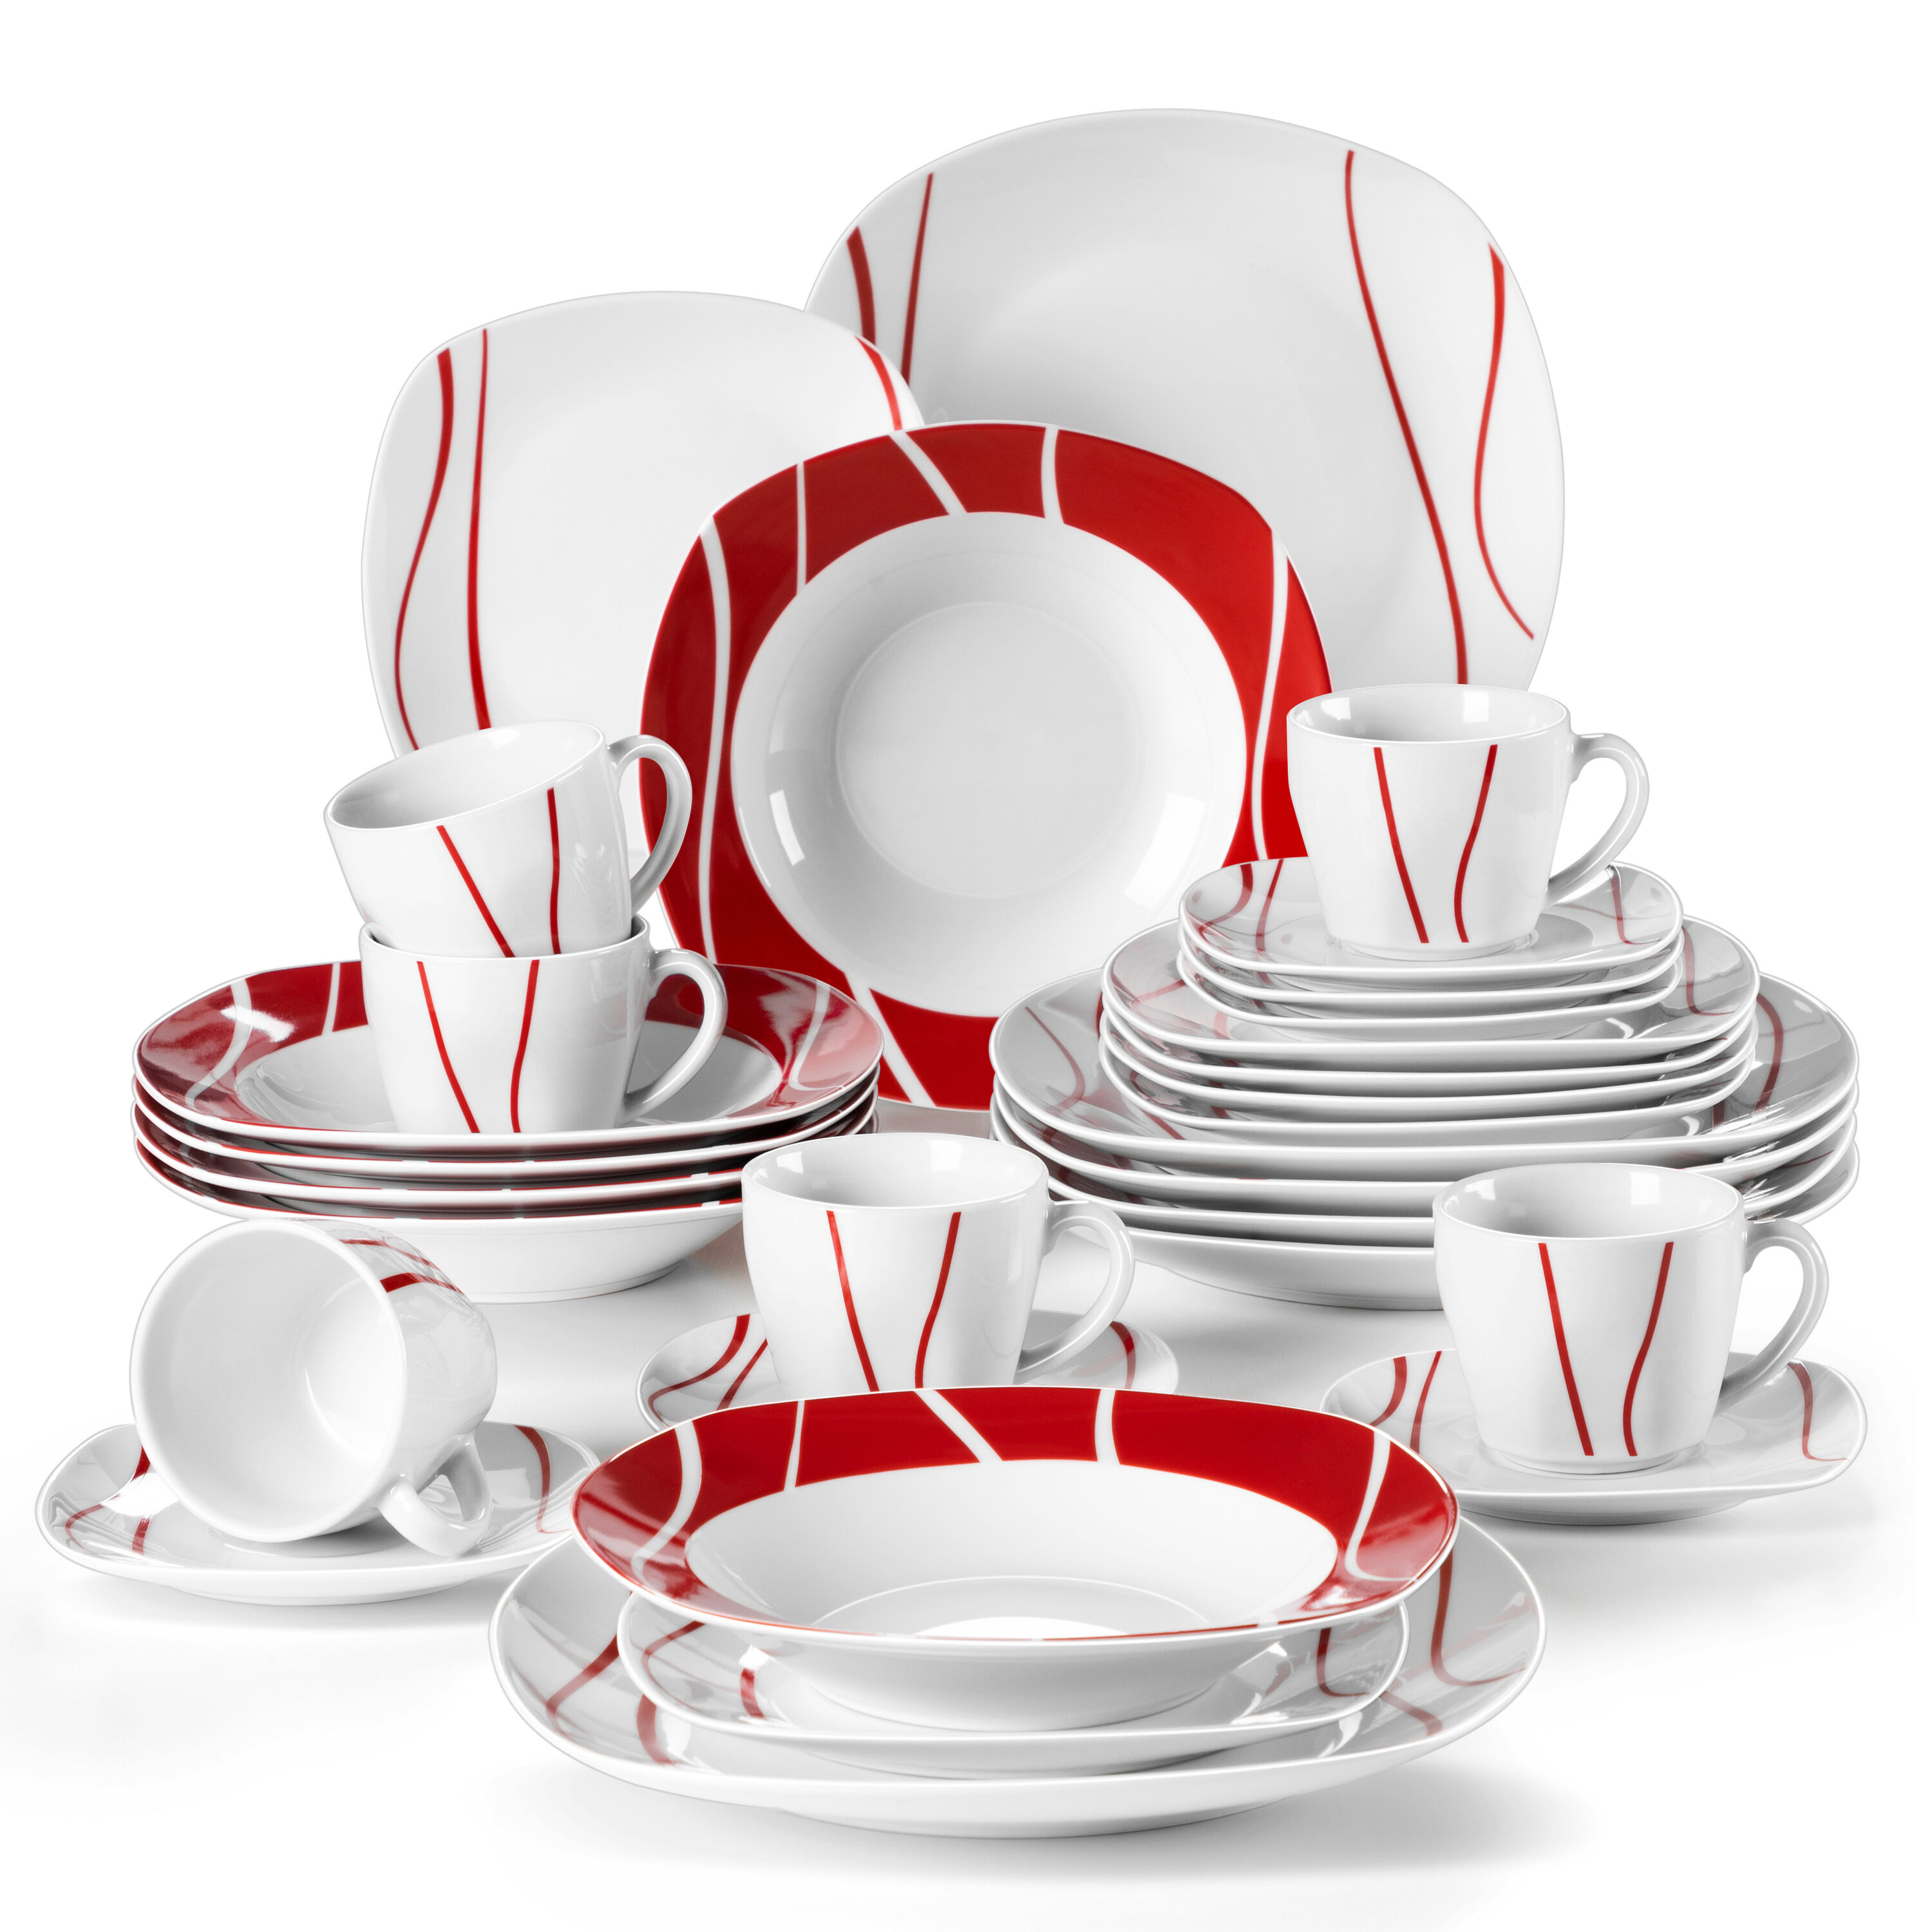 MALACASA 4-Piece White Porcelain Dinnerware in the Dinnerware department at